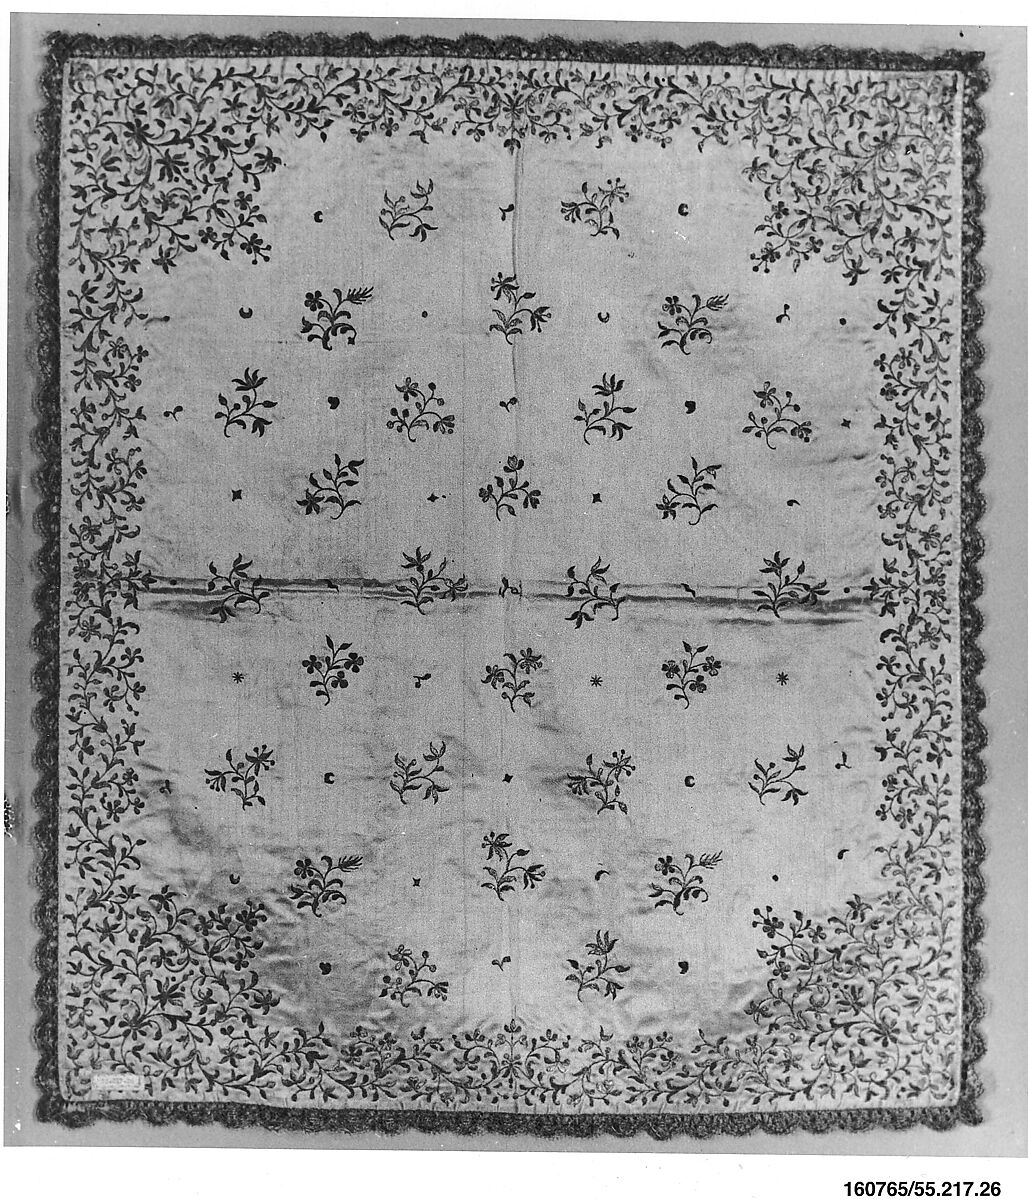 Chalice veil, Silk and metal thread on silk, possibly Swedish 